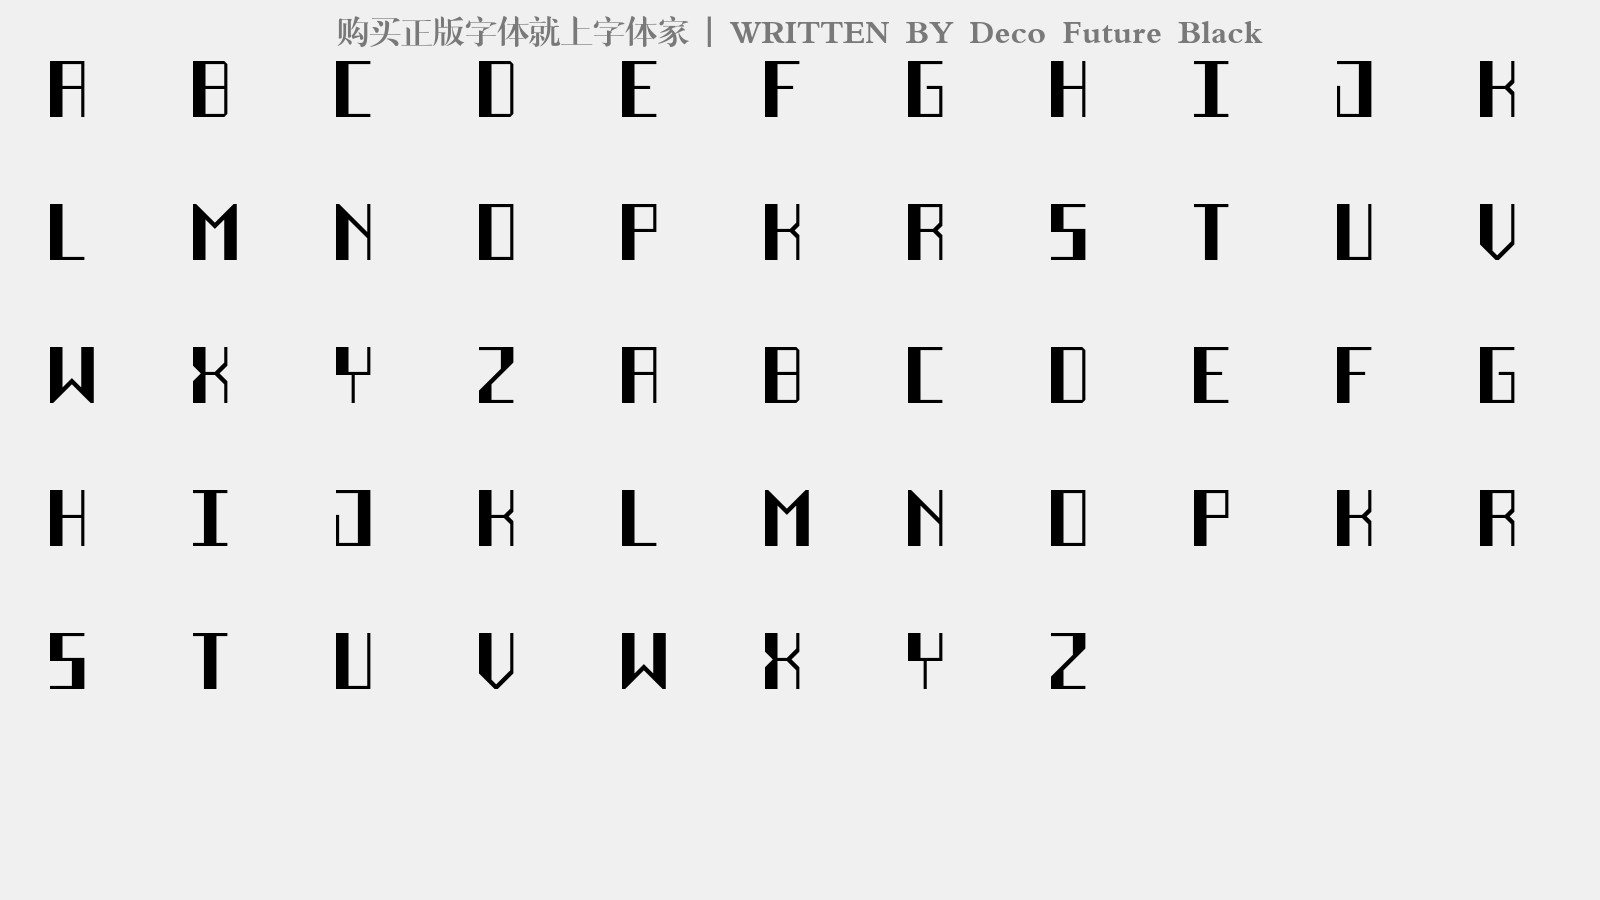 Deco Future Black - 大写字母/小写字母/数字